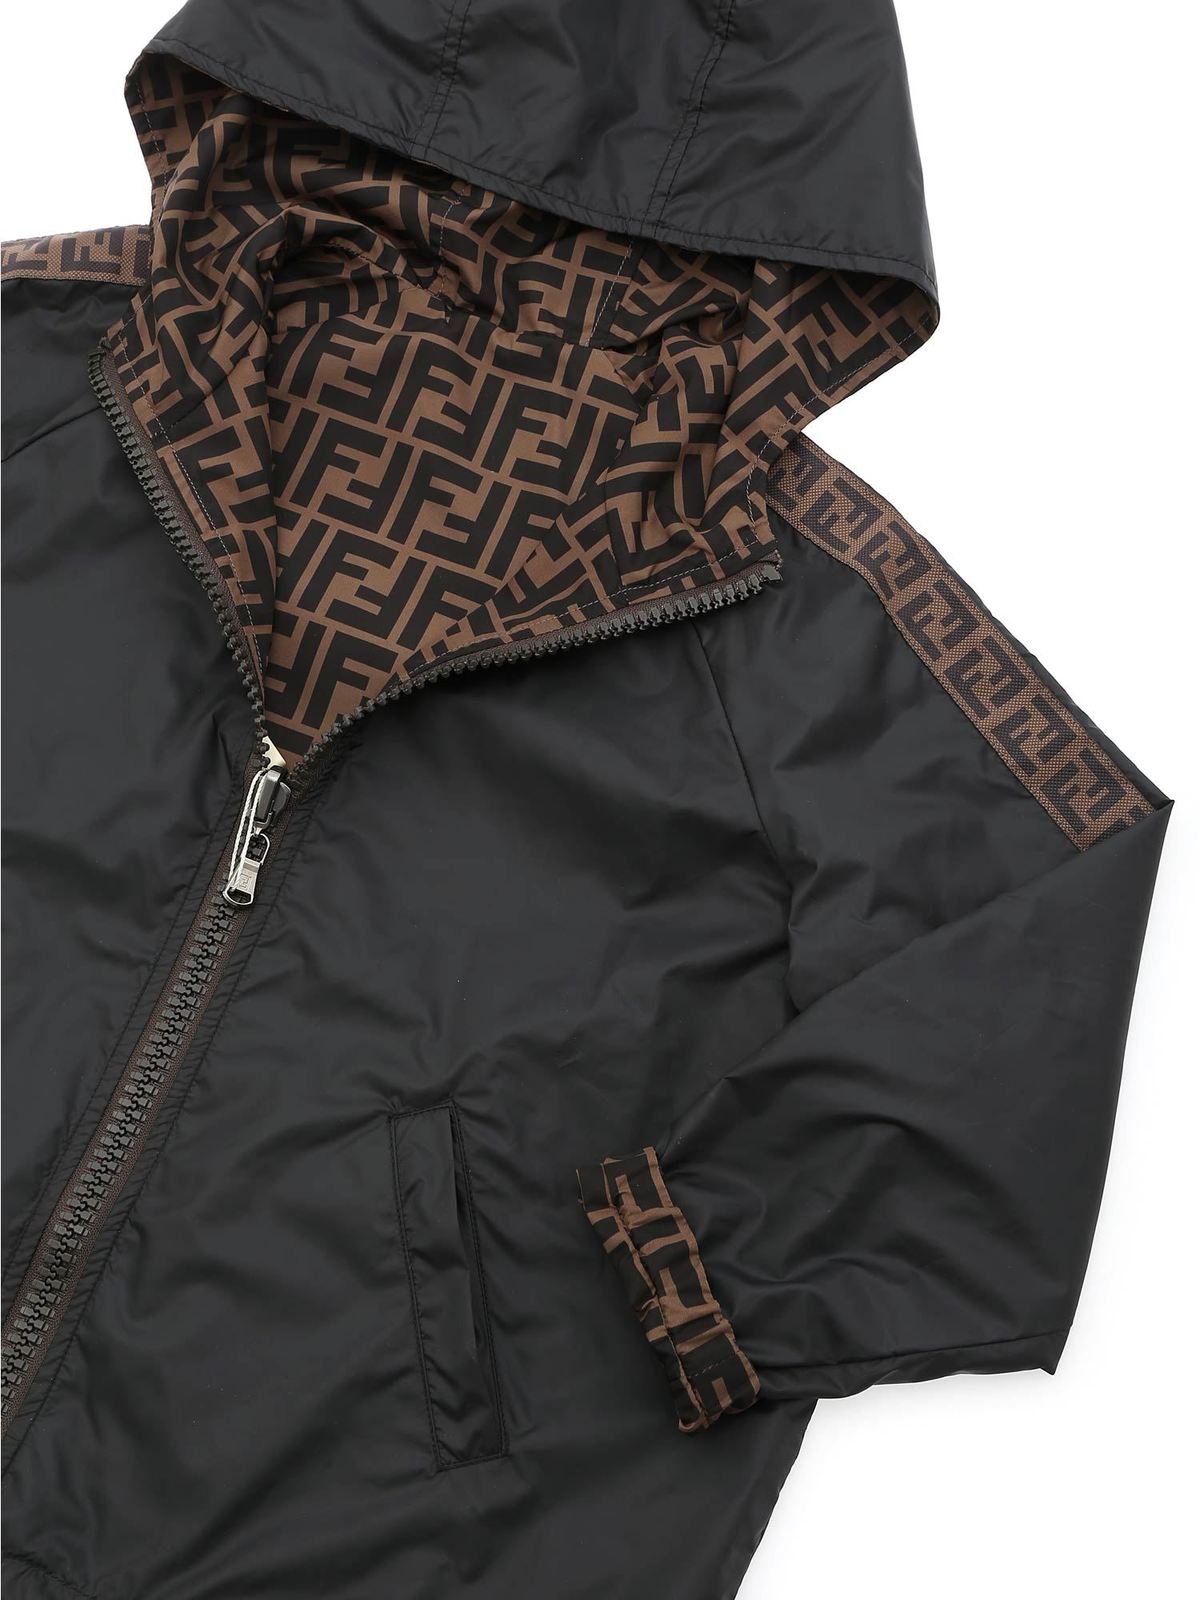 Fendi Reversible Jacket in Padded Nylon